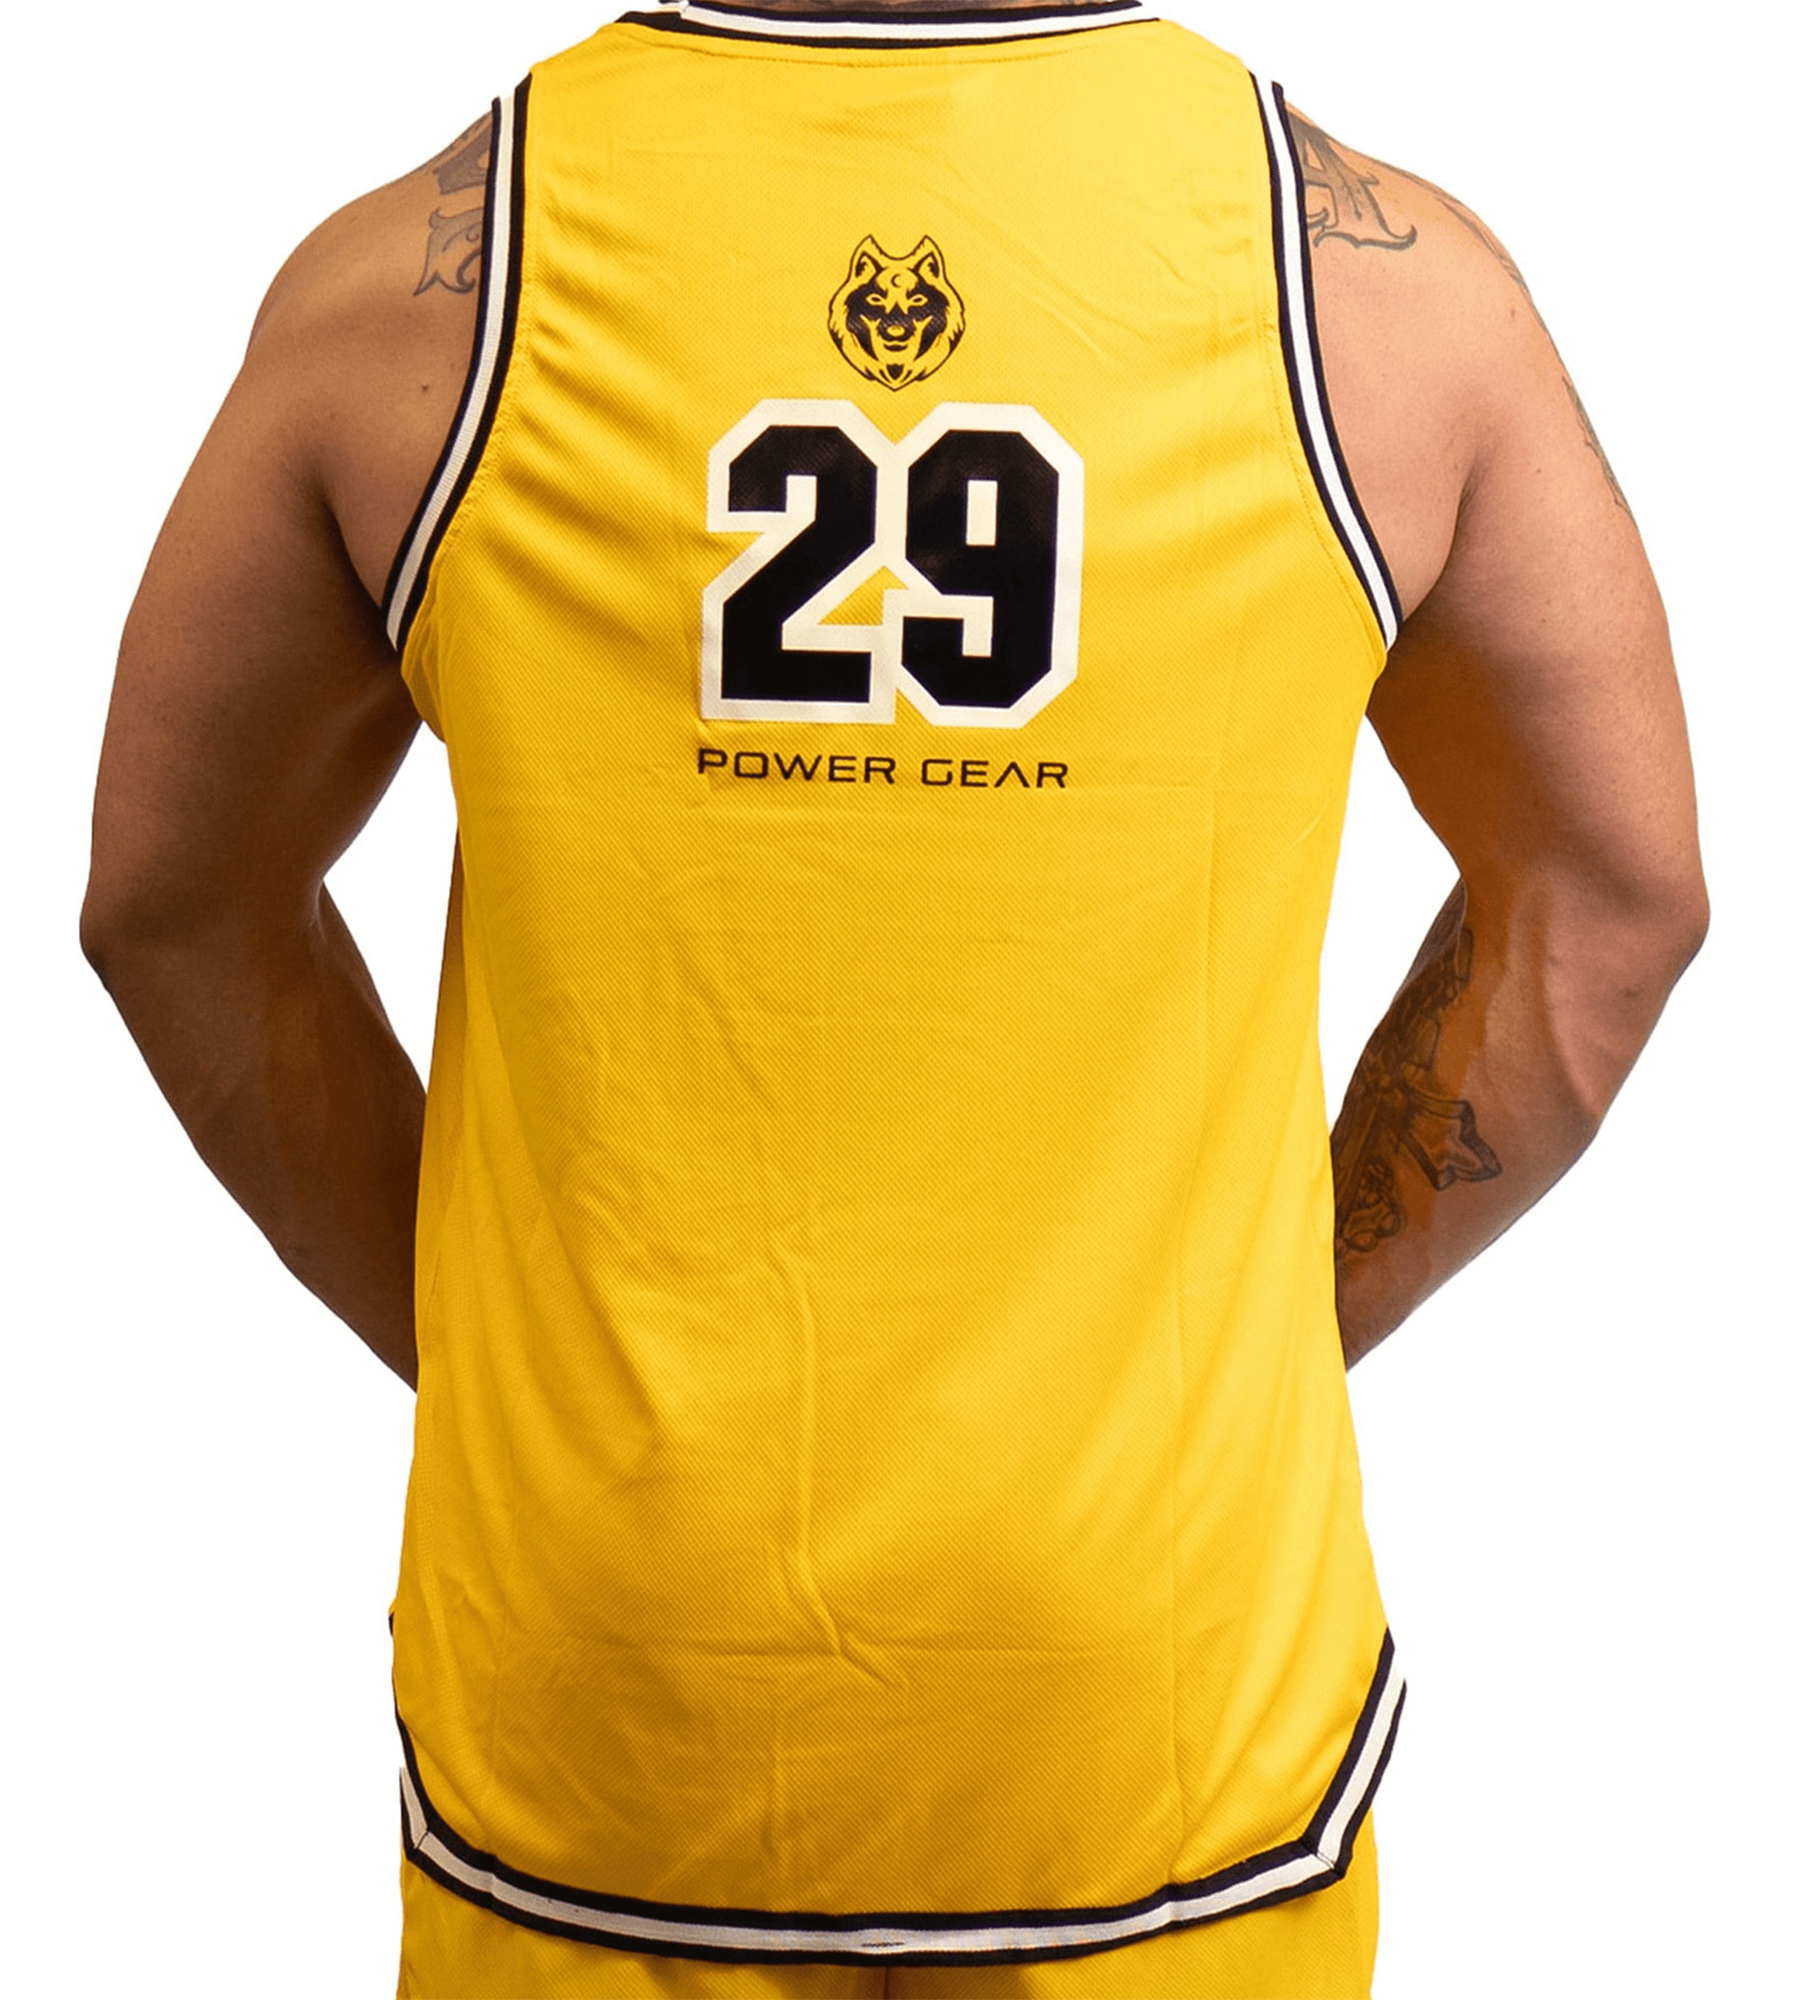 FitnessFox Basketball Singlet -Yellow